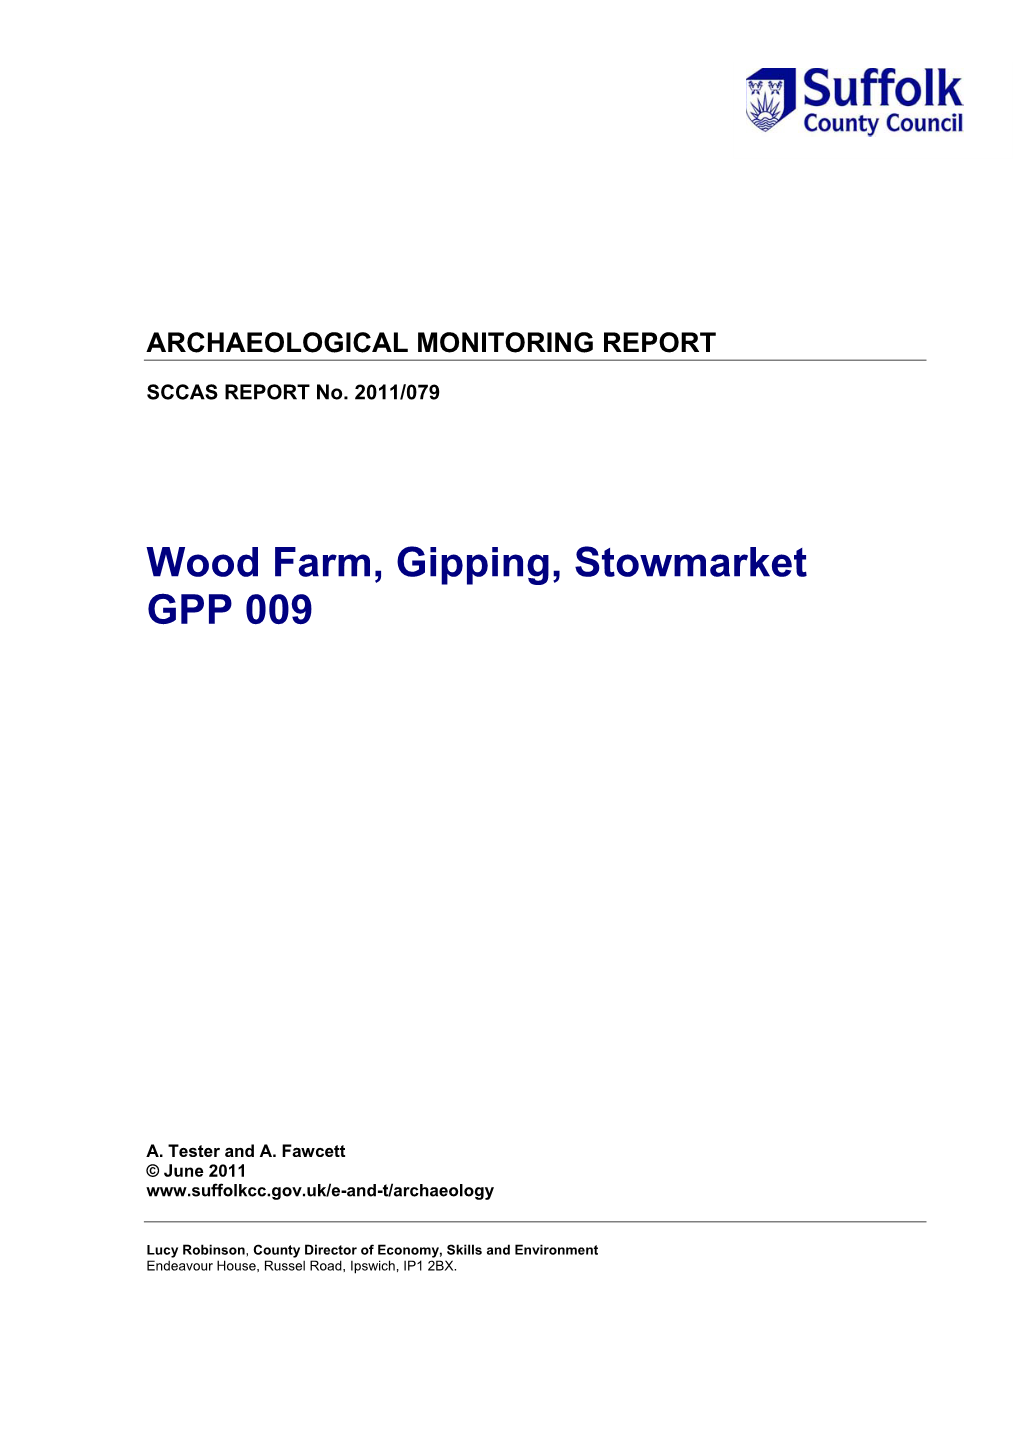 Wood Farm, Gipping, Stowmarket GPP 009